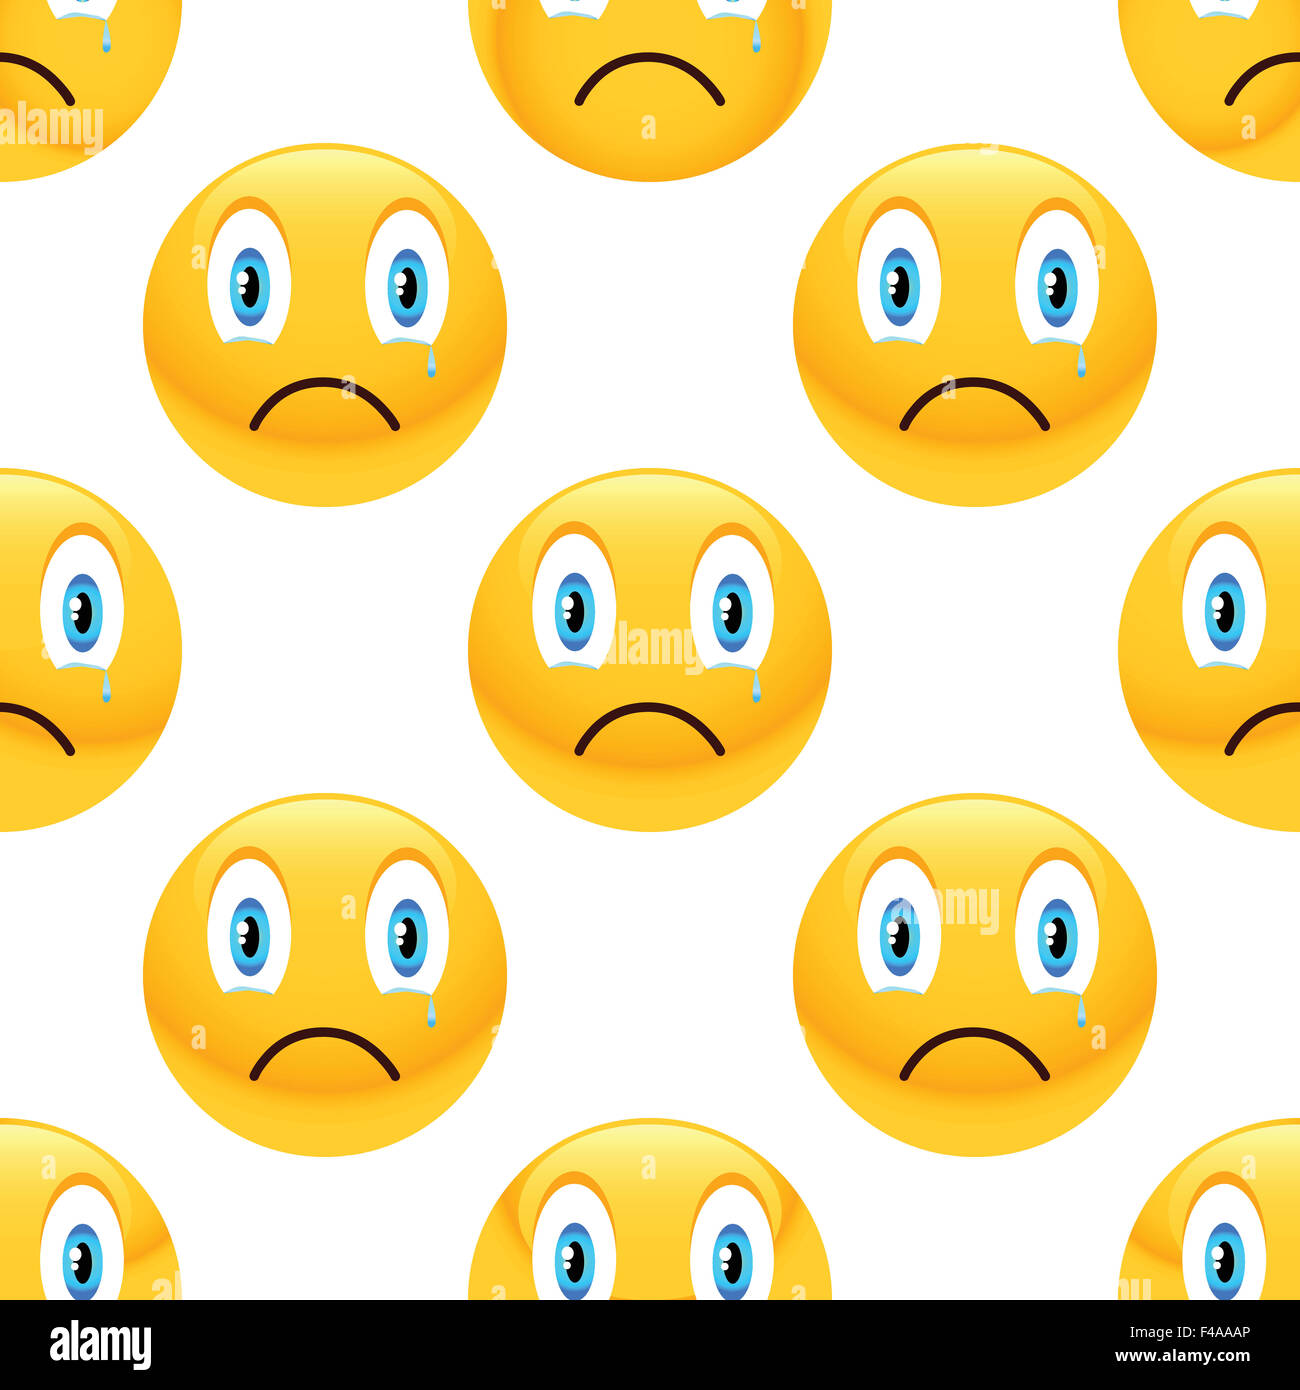 Sad emoticon pattern Stock Photo